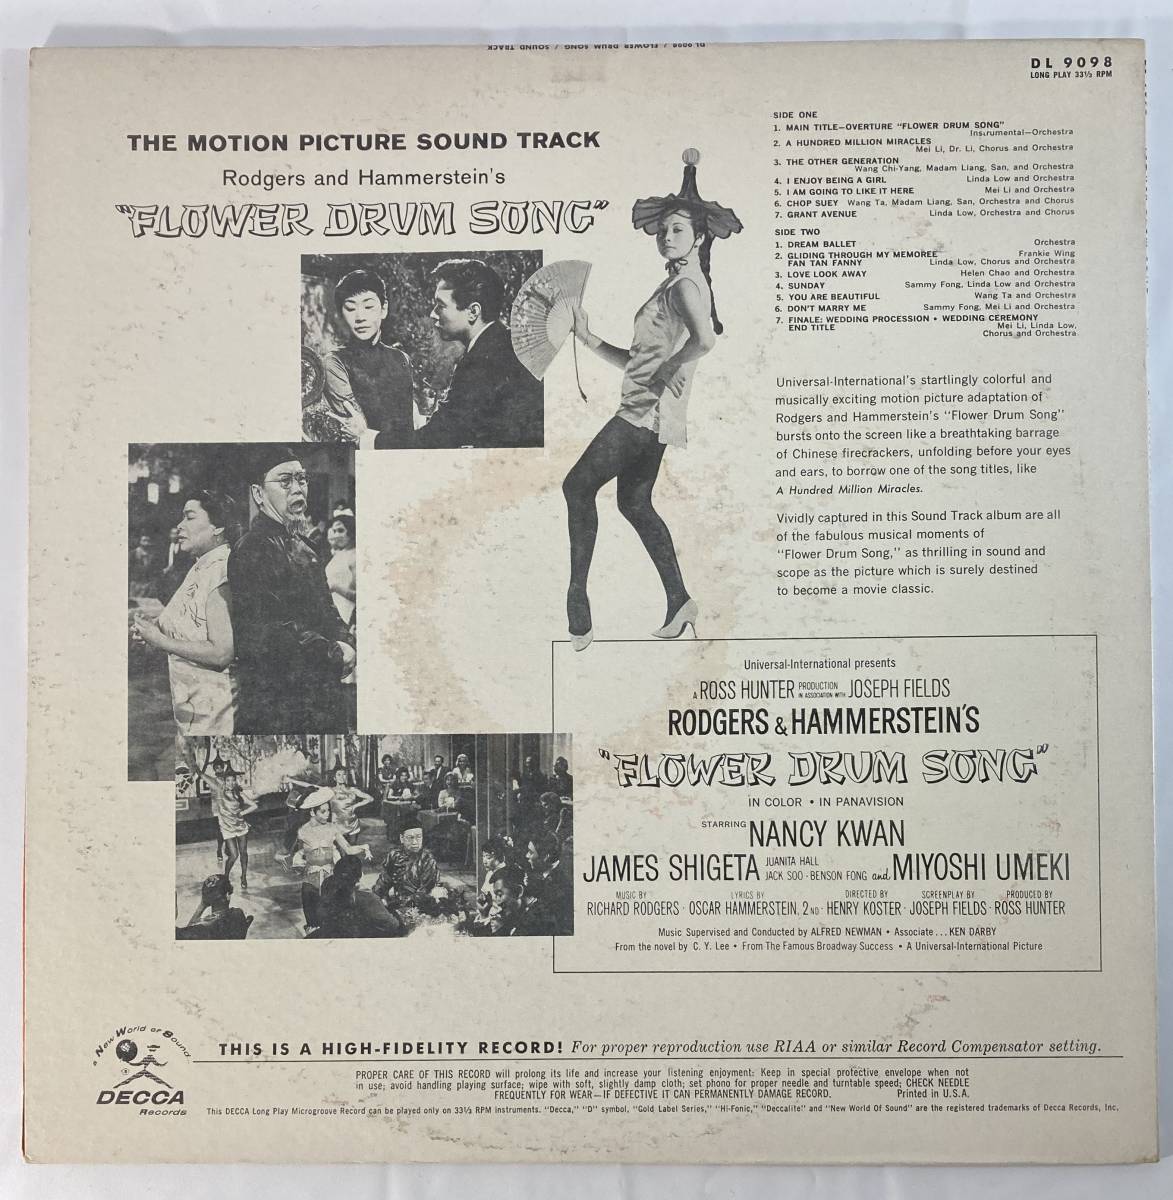  flower * drum *song(1961) Richard * Roger s& Oscar * Hummer baby's bib nⅡ rice record LP DECCA DL 9098